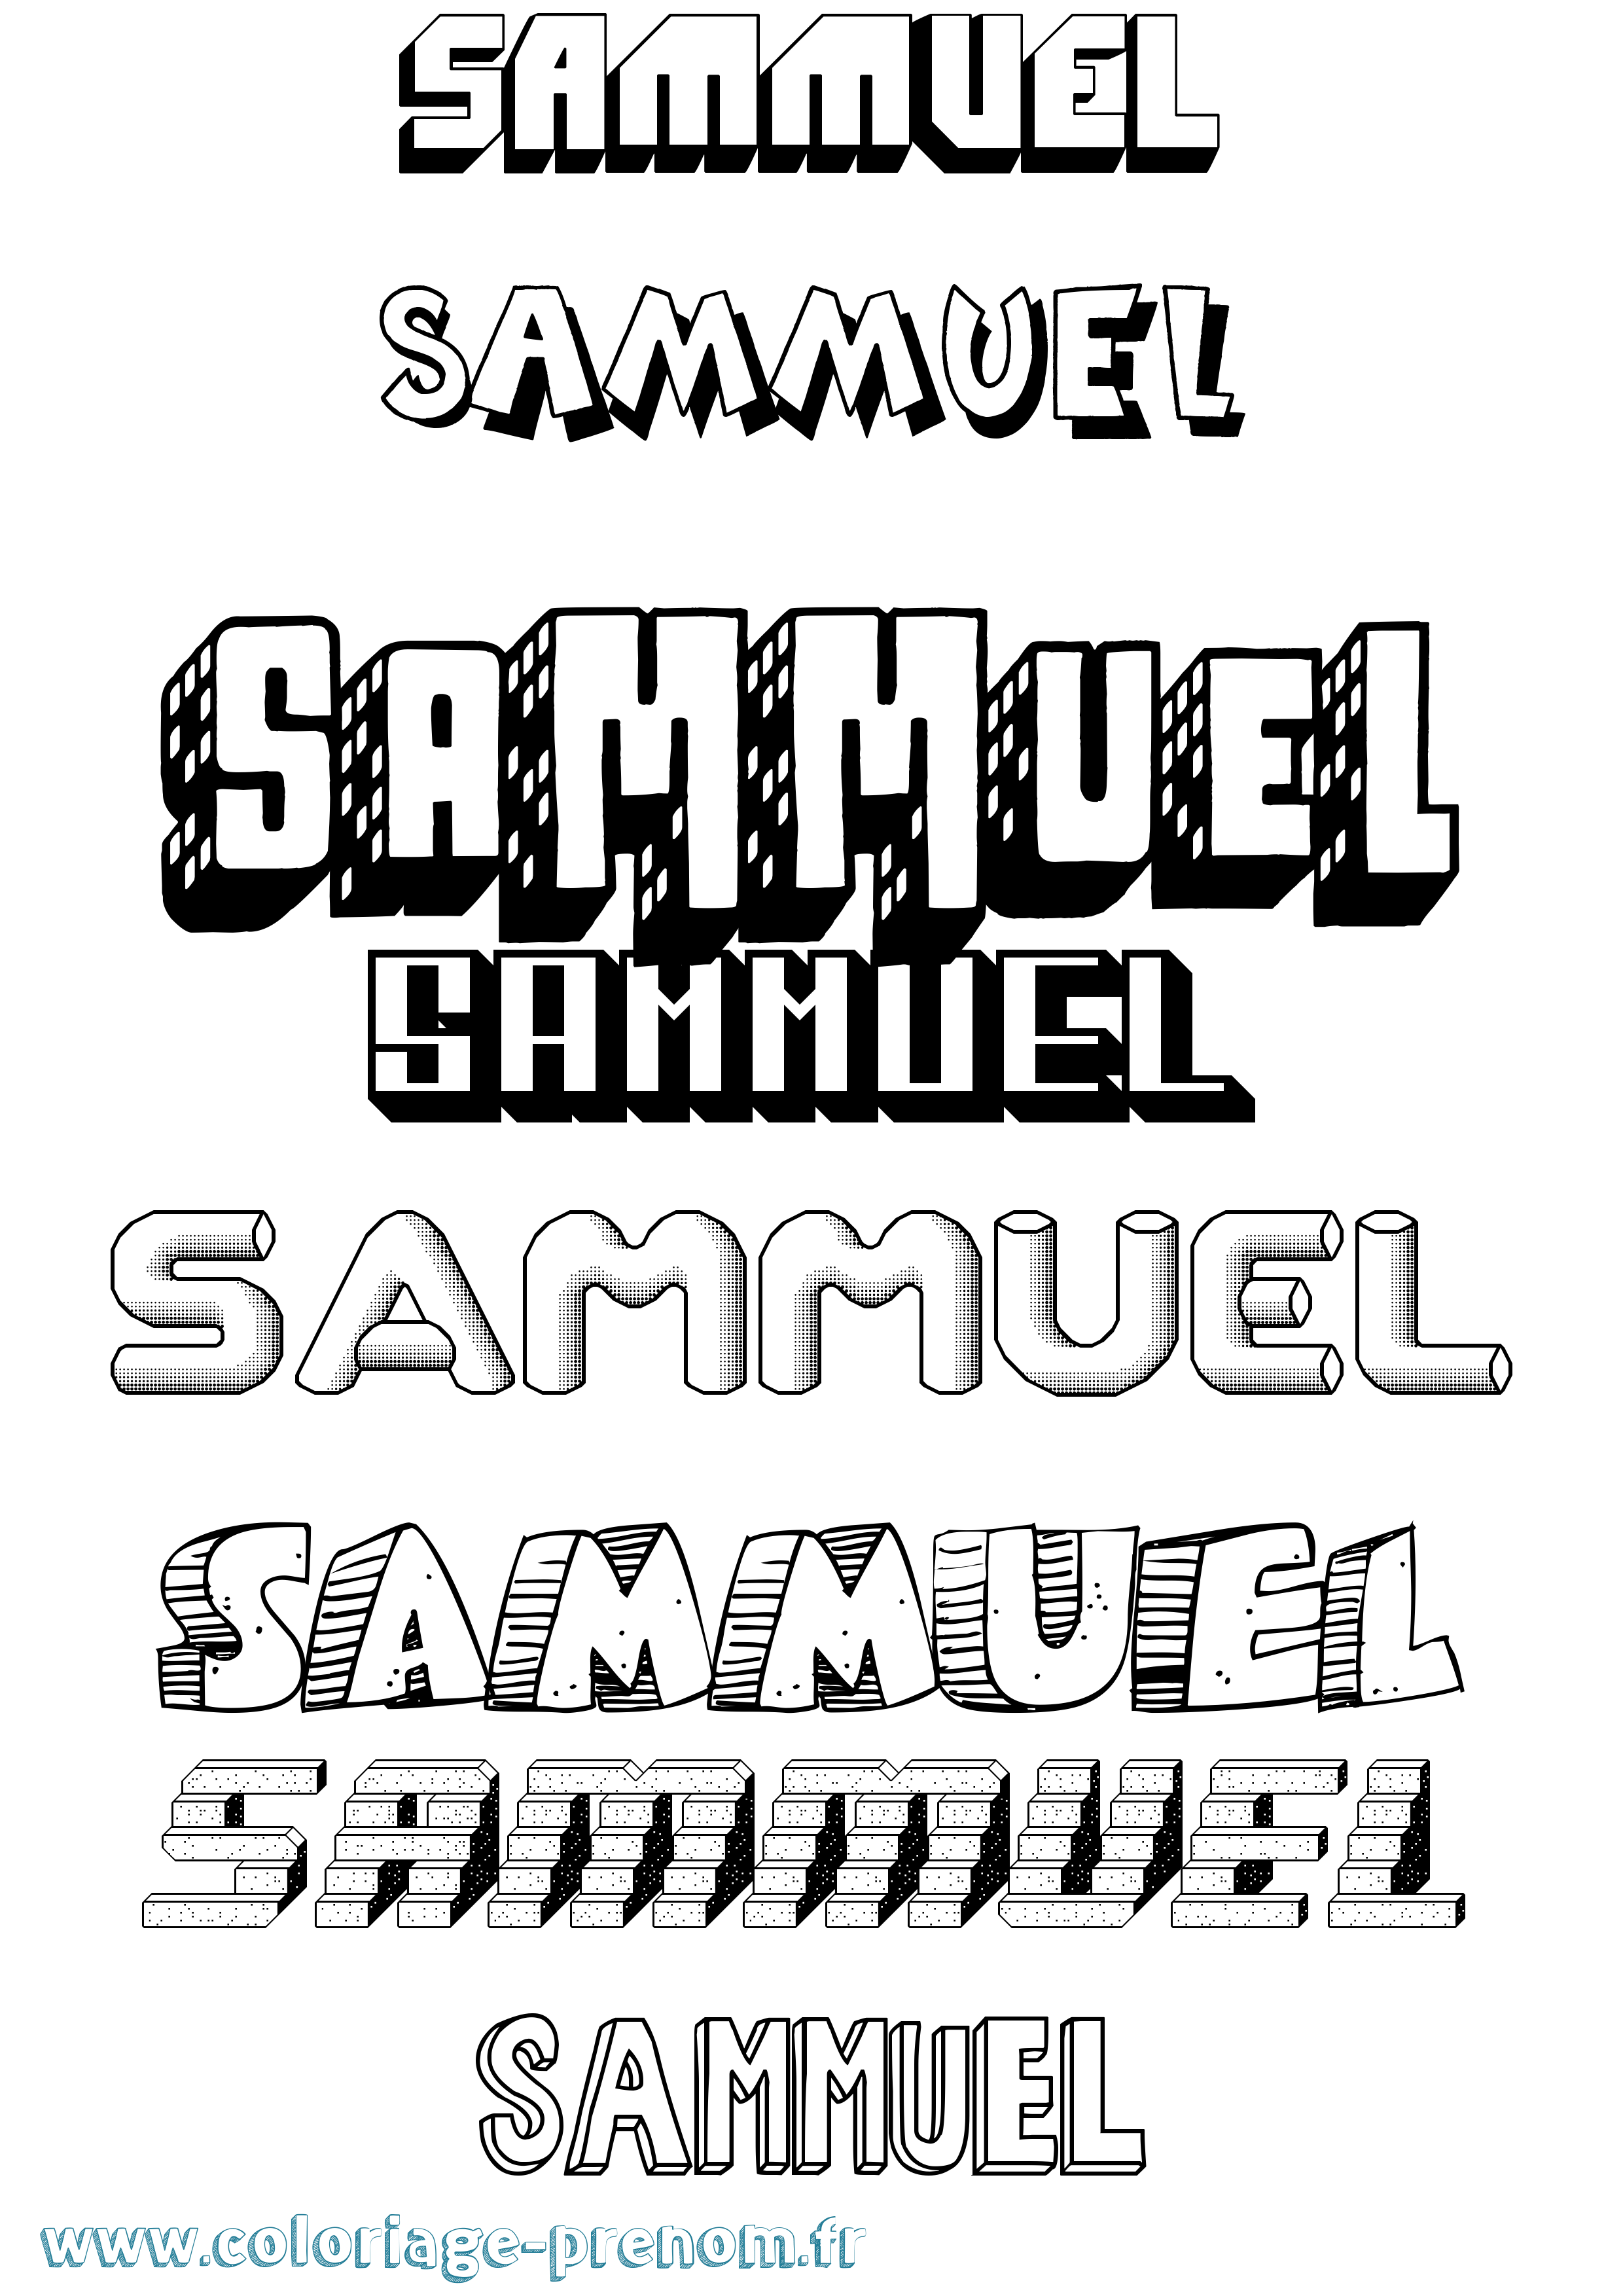 Coloriage prénom Sammuel Effet 3D